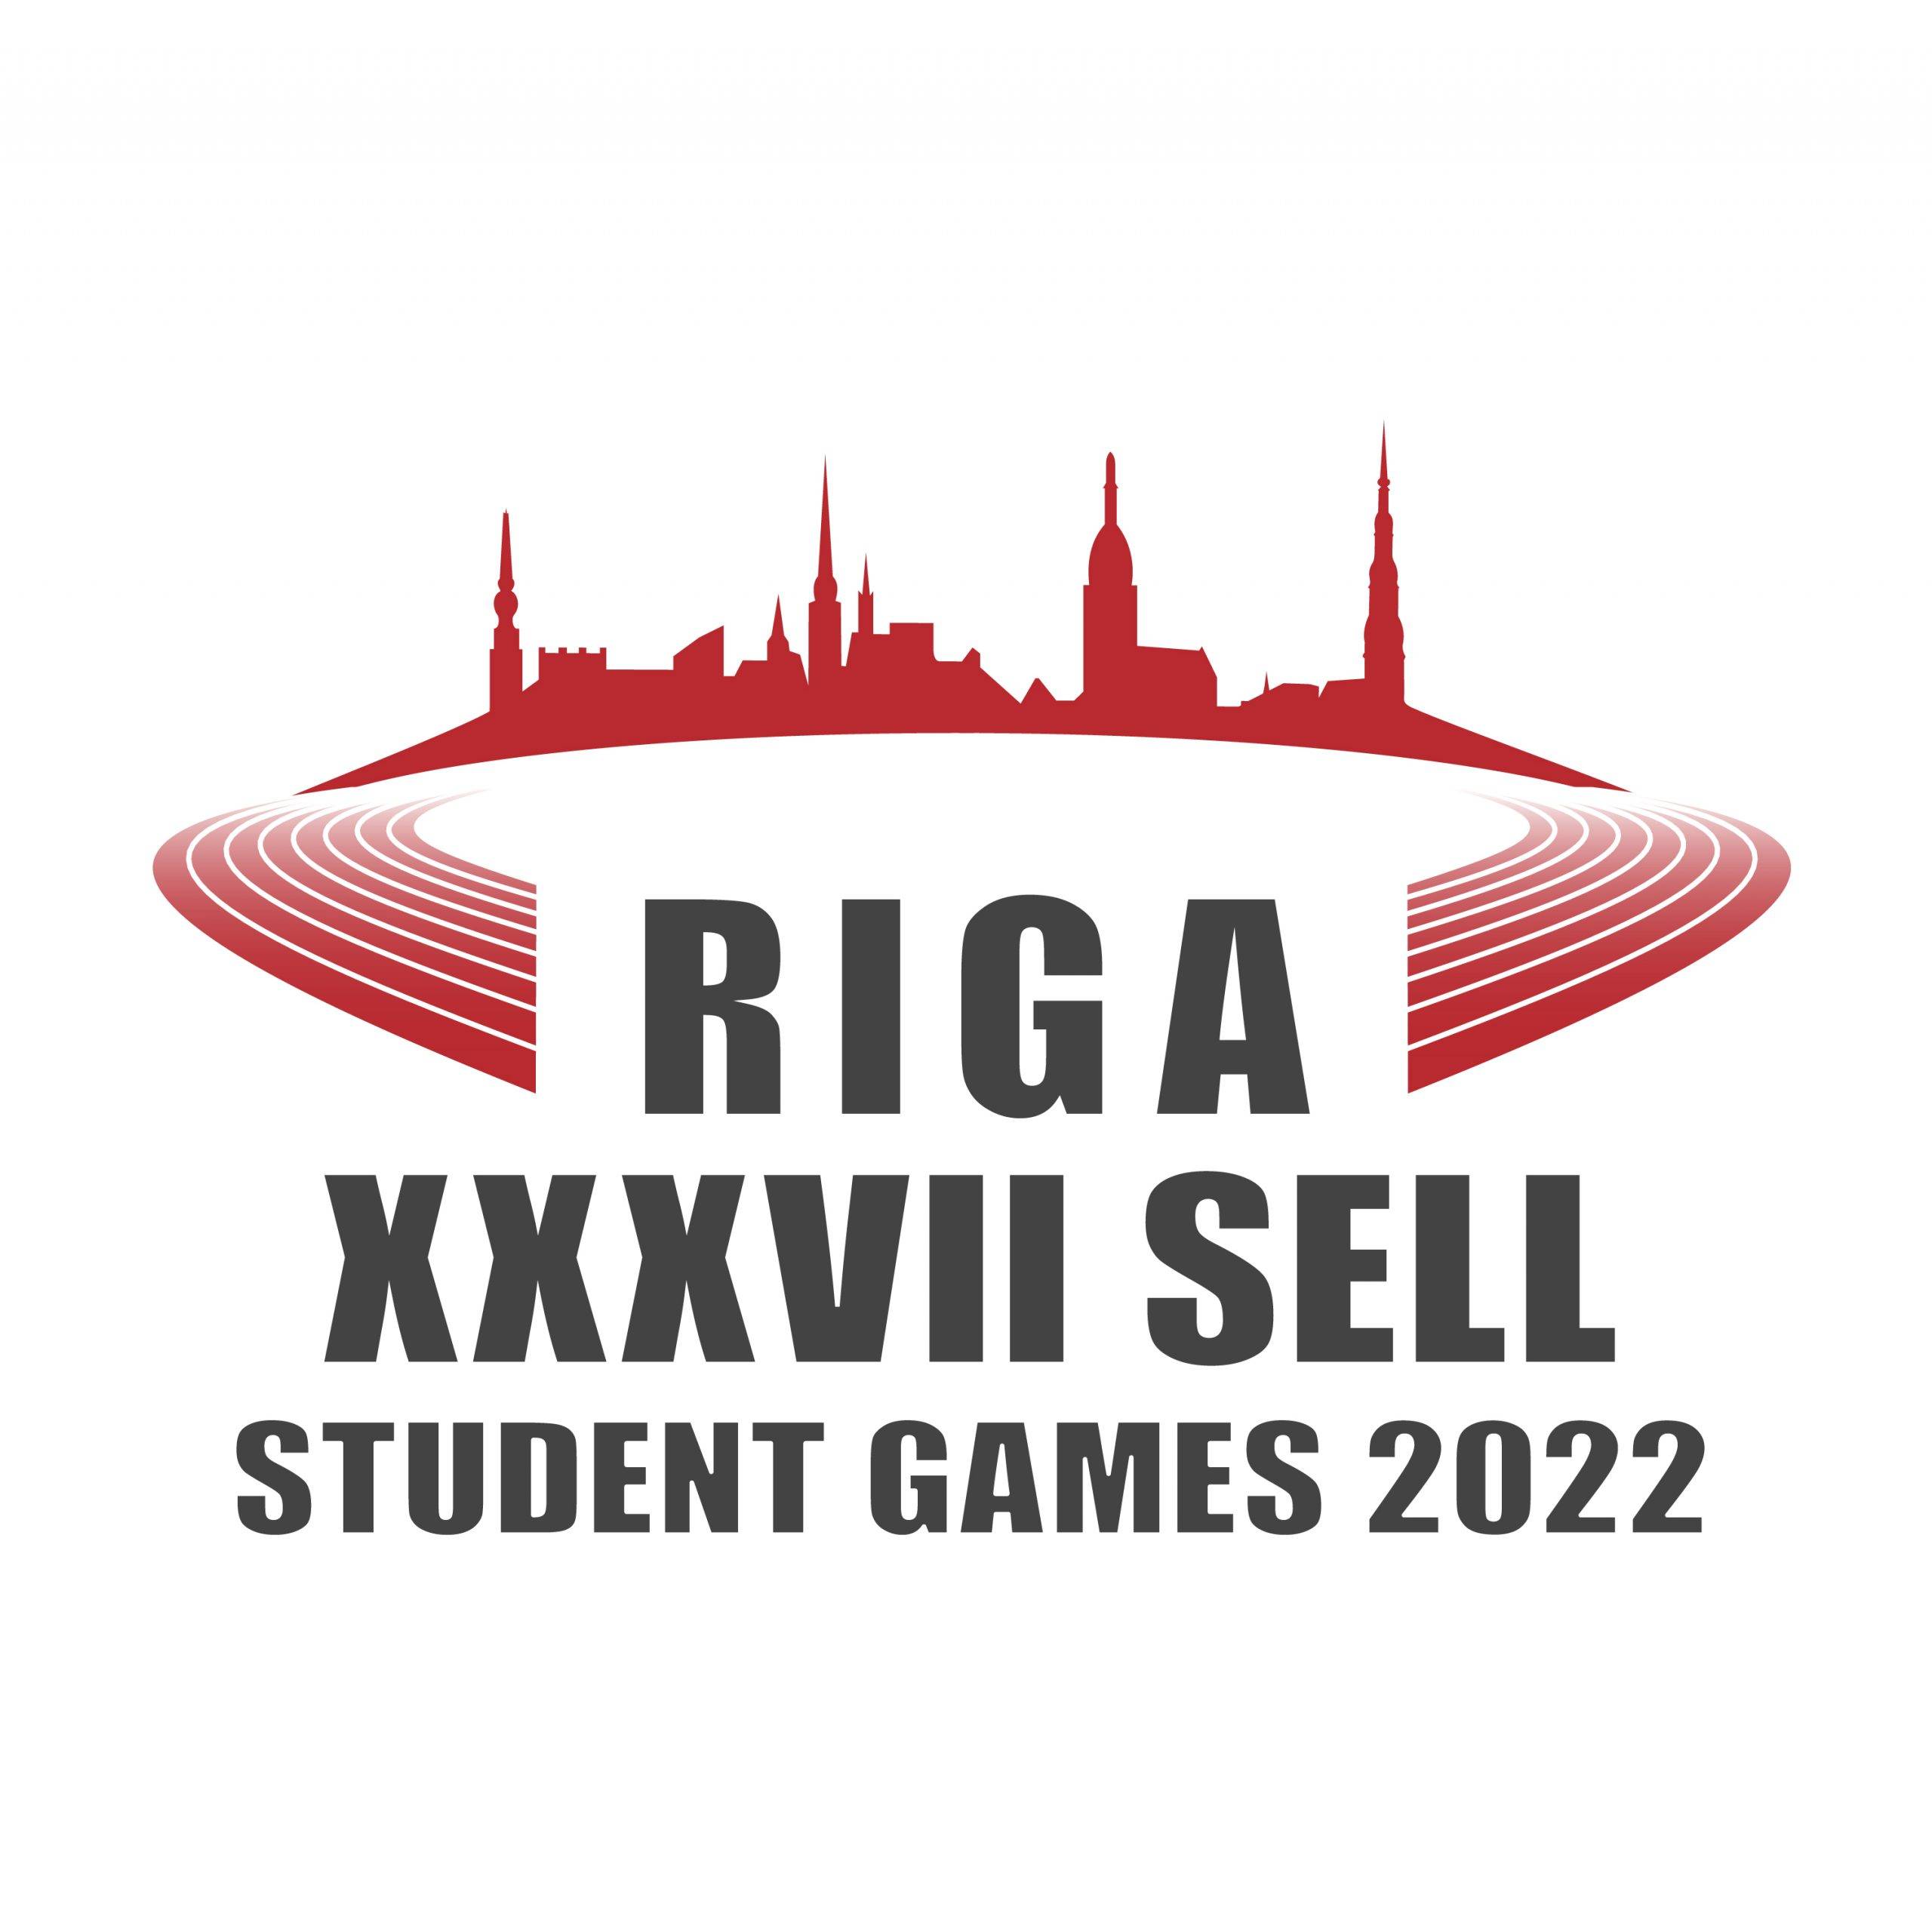 XXXVII SELL Studentu spēļu oficiālais logo.